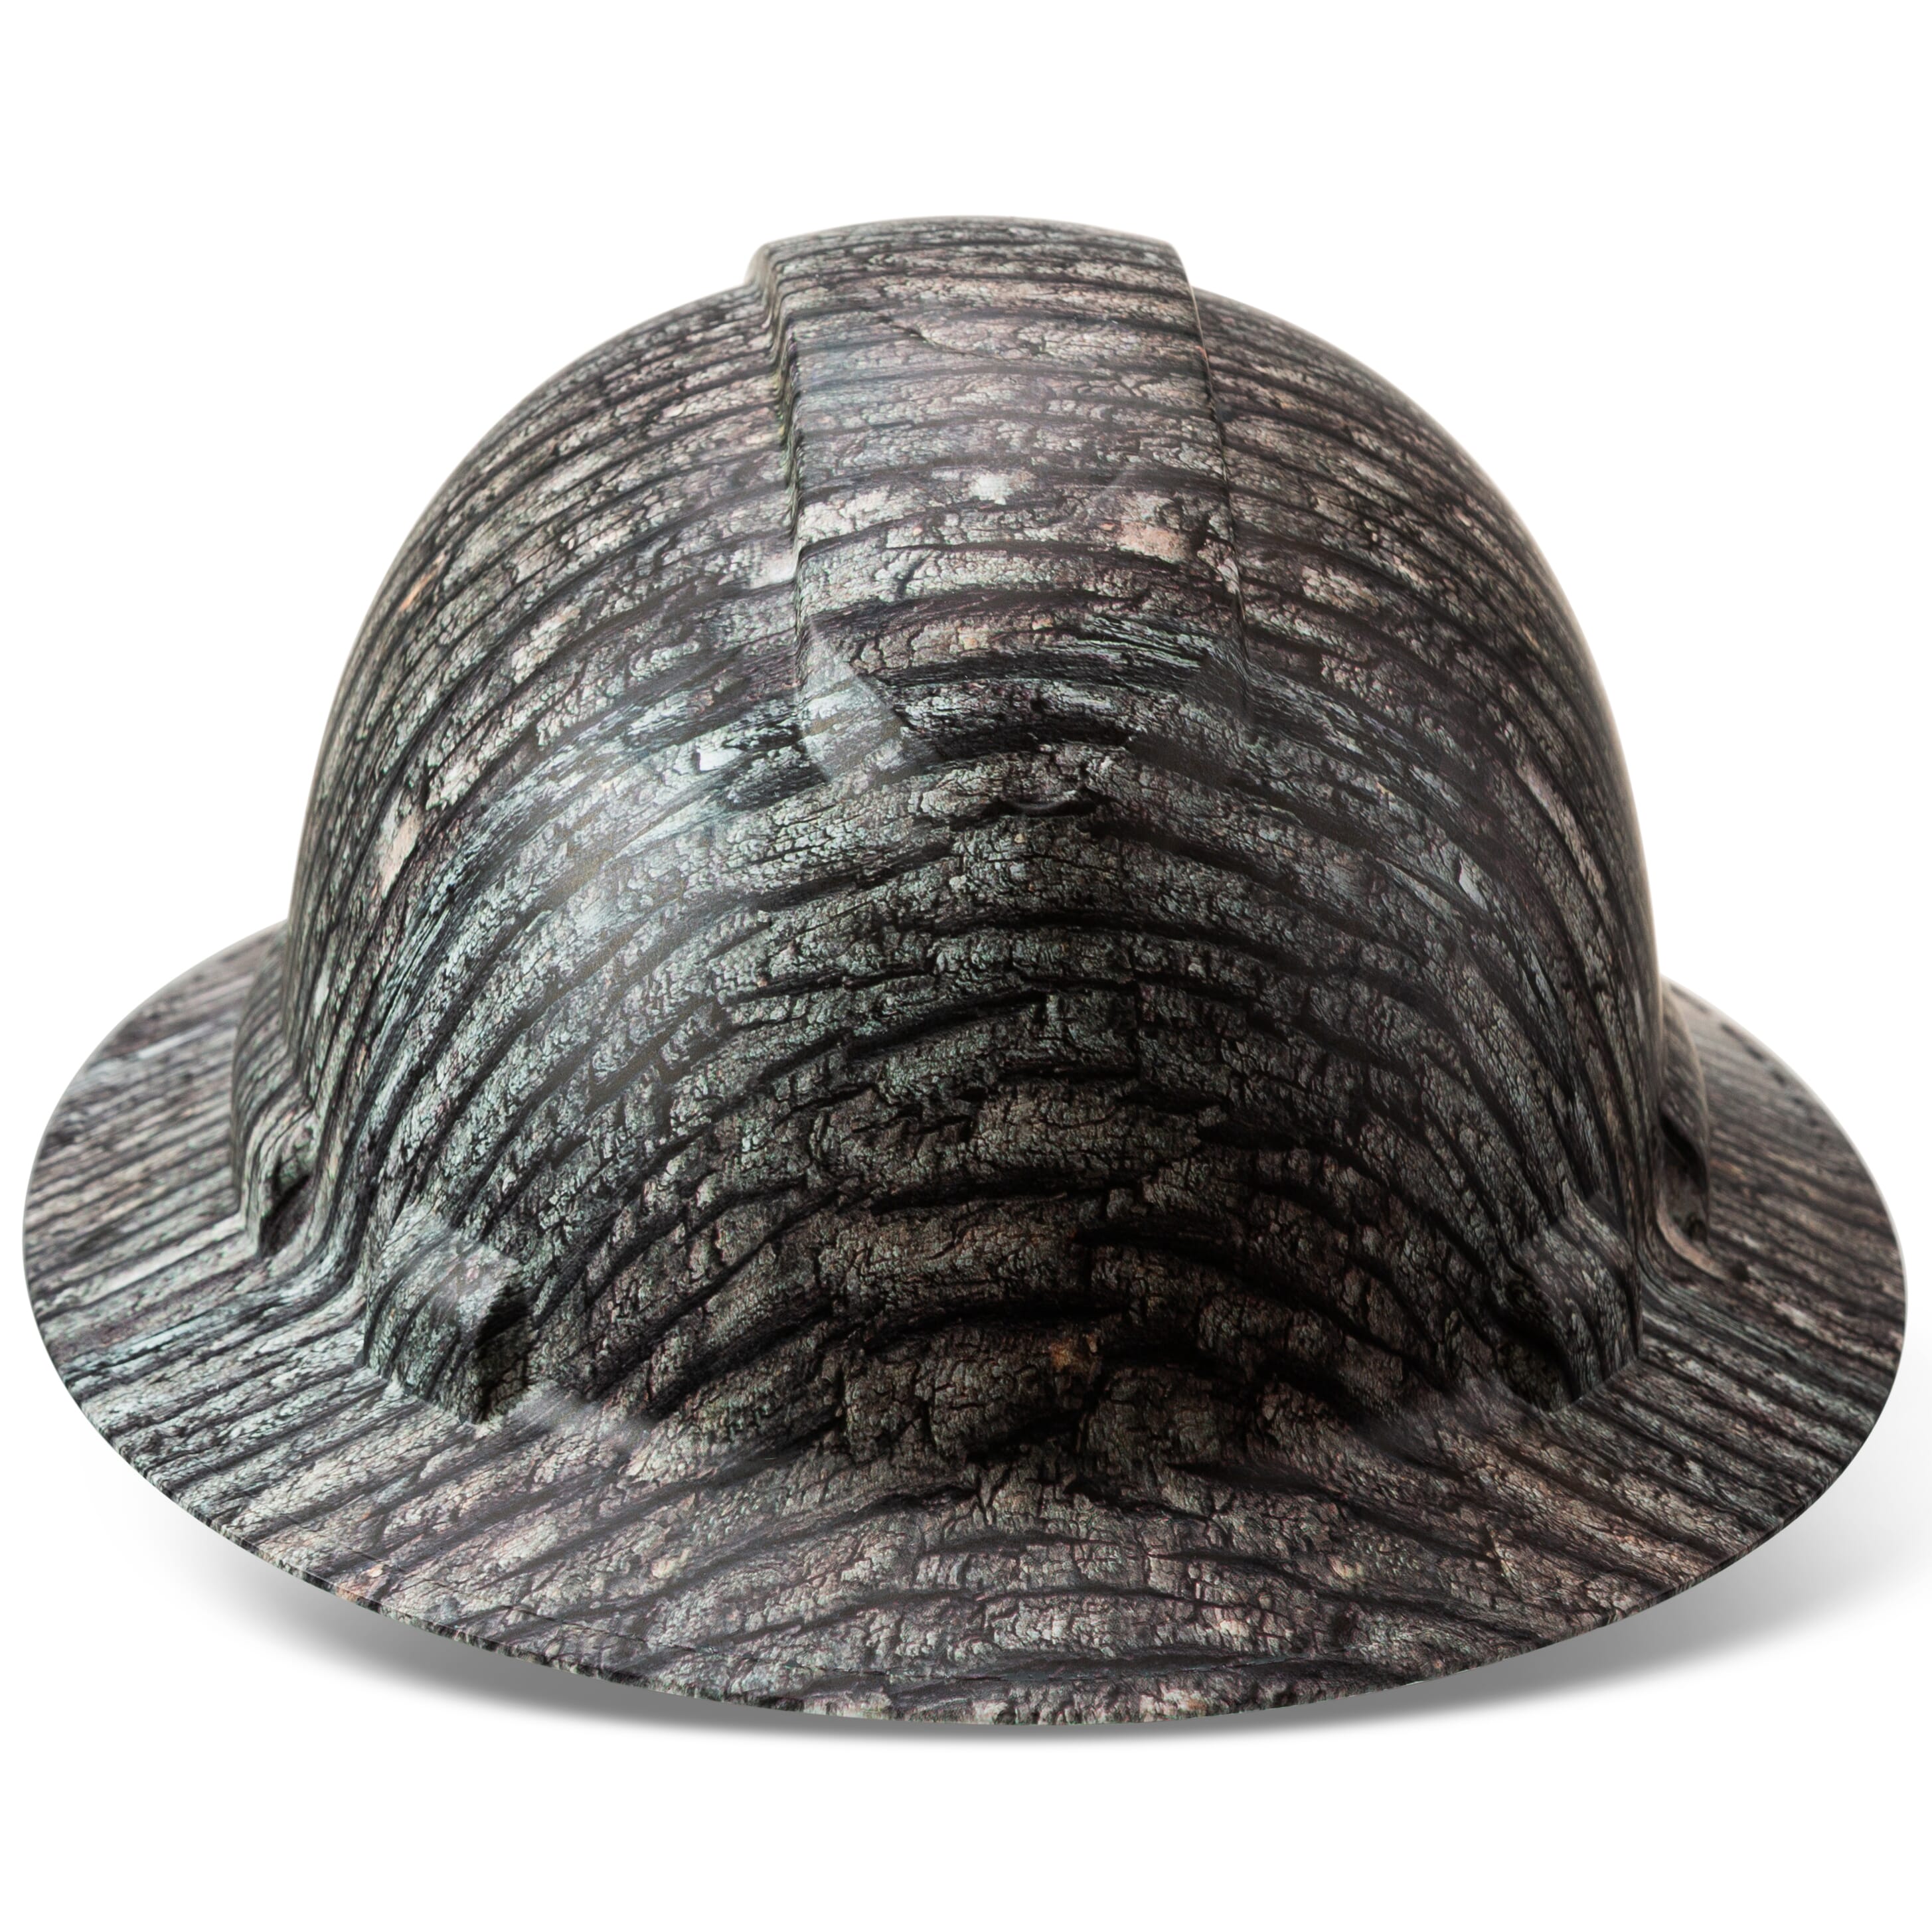 Full Brim Pyramex Hard Hat, Custom Bark Or Bite Camo Design, Safety Helmet, 6 Point